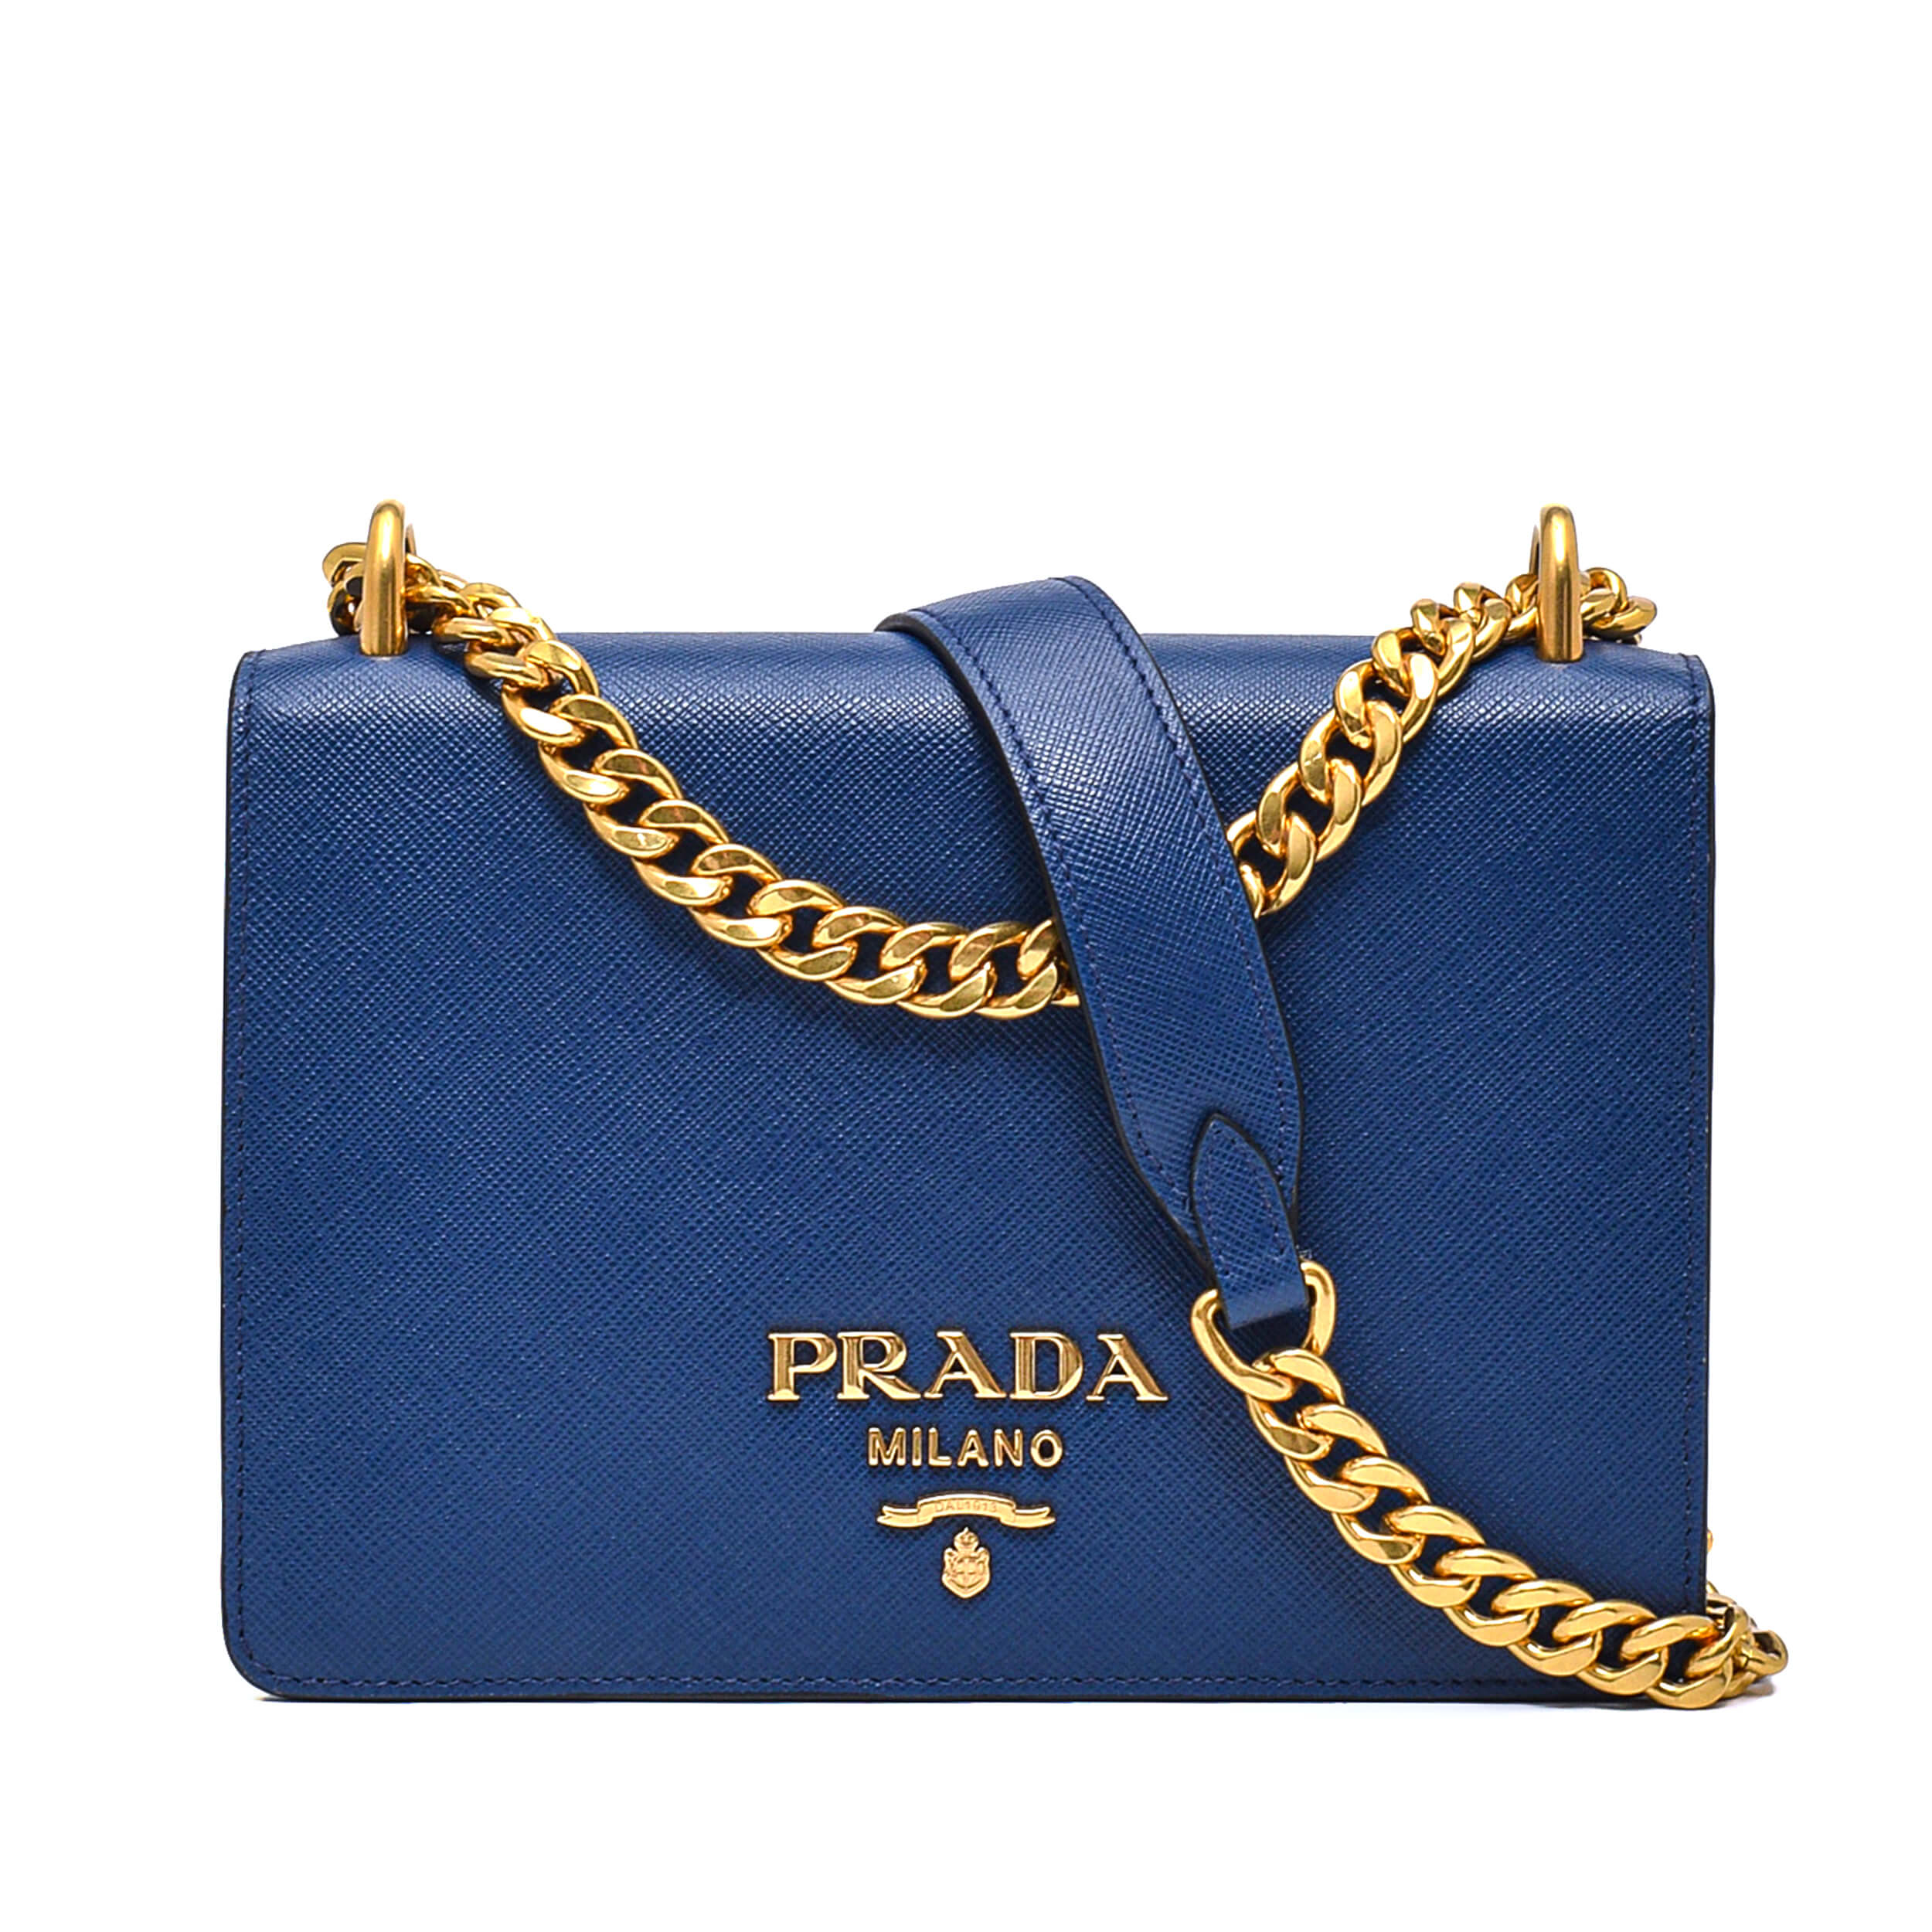 Prada - Navy Blue Saffiano Leather Chain Flap Shoulder Bag